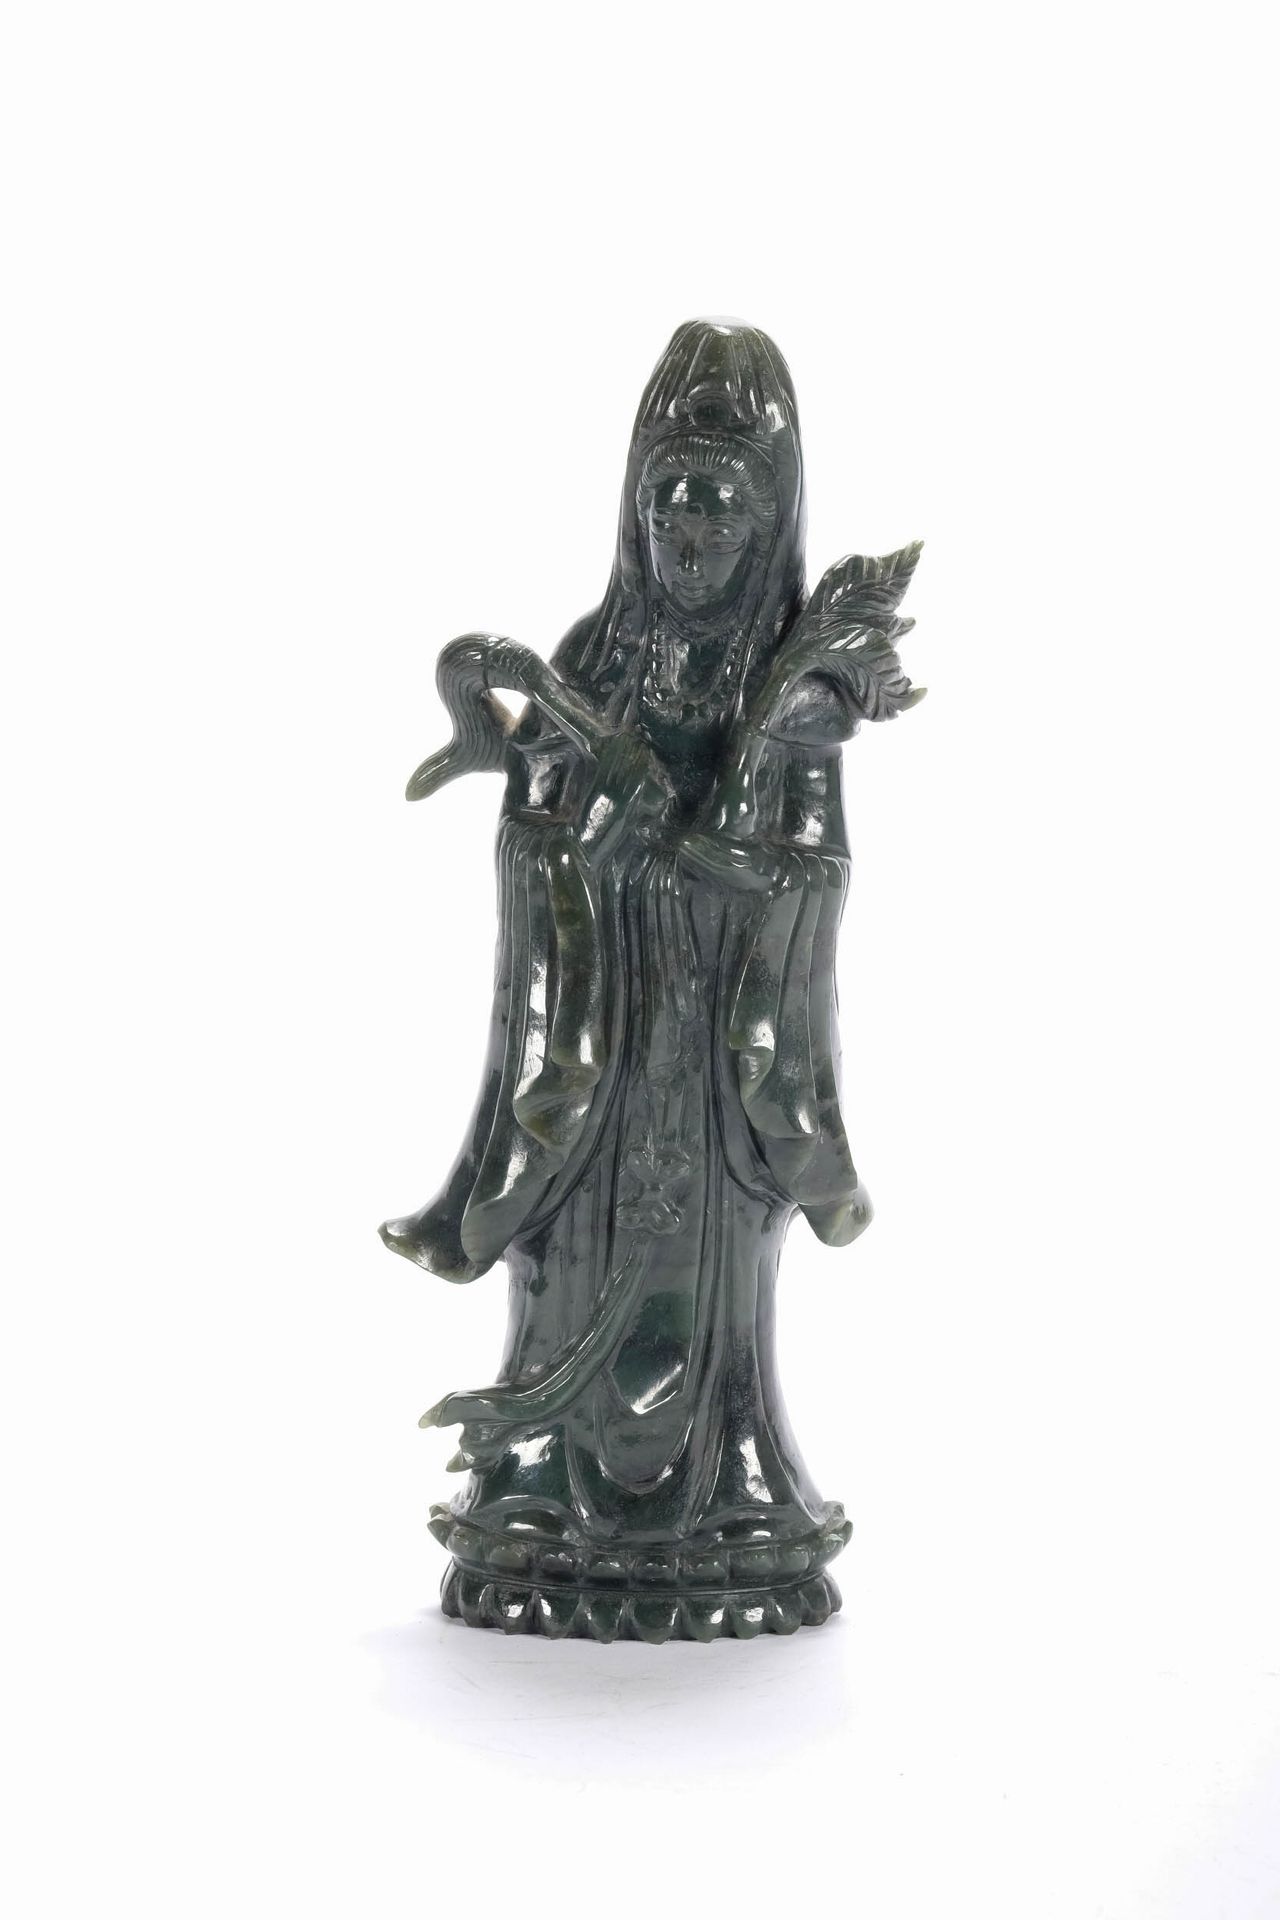 CHINE (CHINA, 中国) Statuette en jade, marquage sous la base, H 23,5 cm.